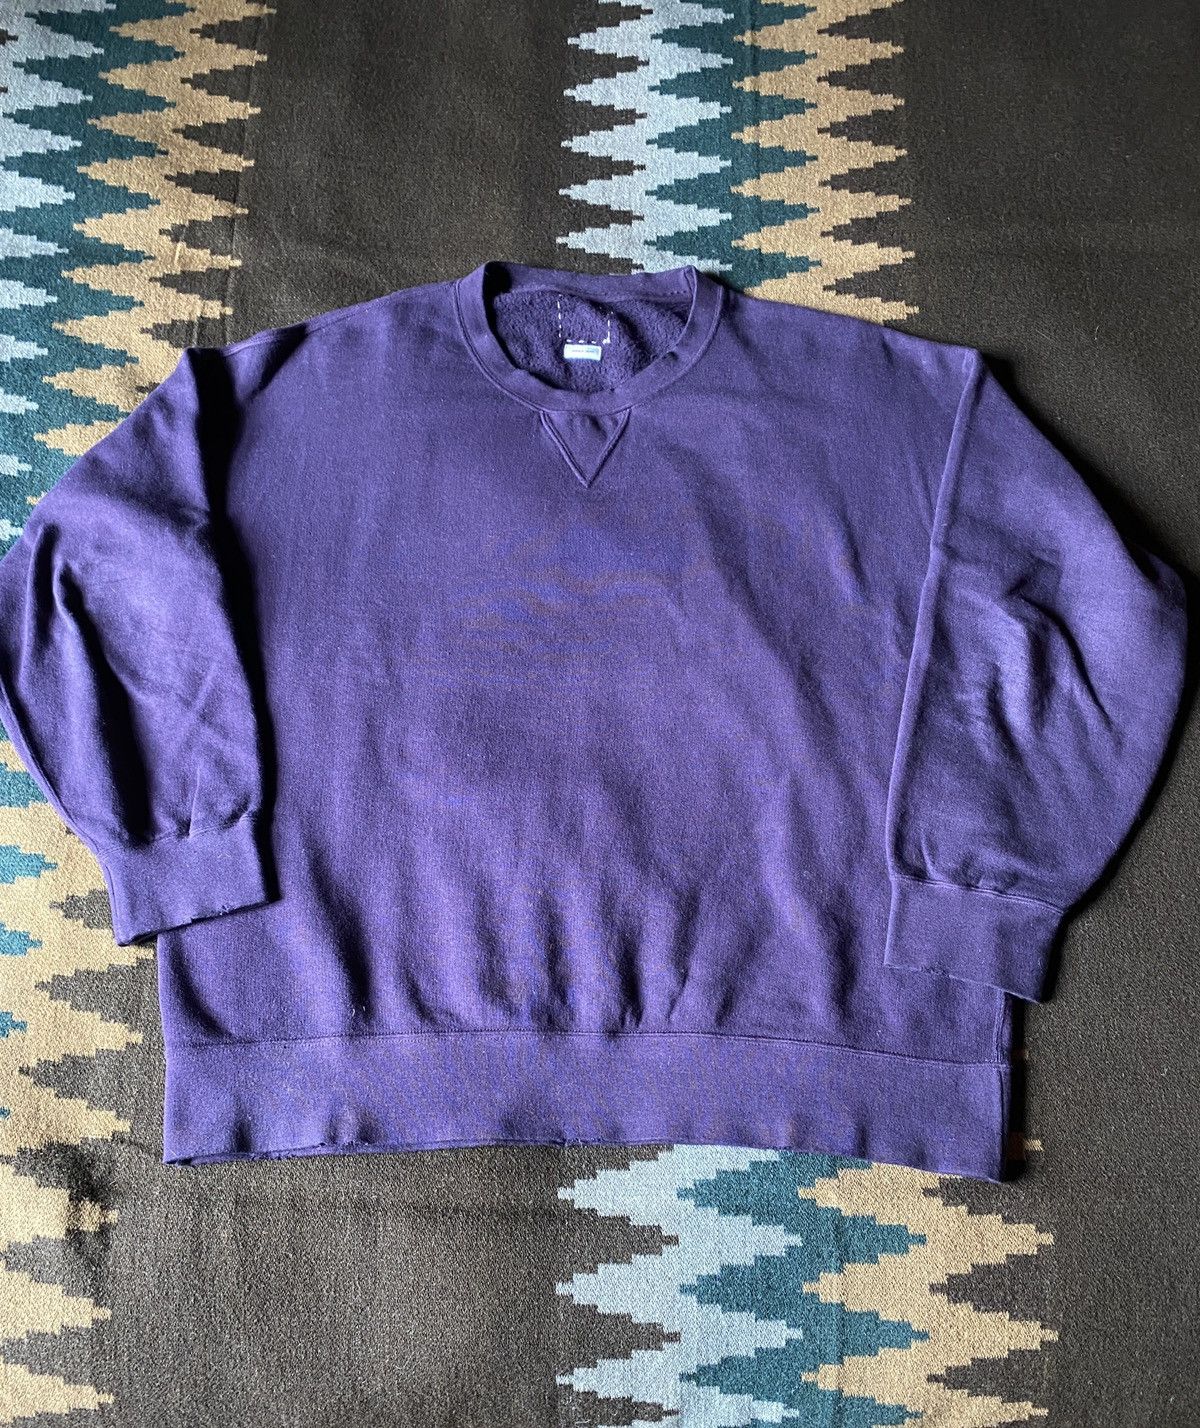 Visvim Jumbo Sweatshirt L/S Purple Uneven Dye | Grailed